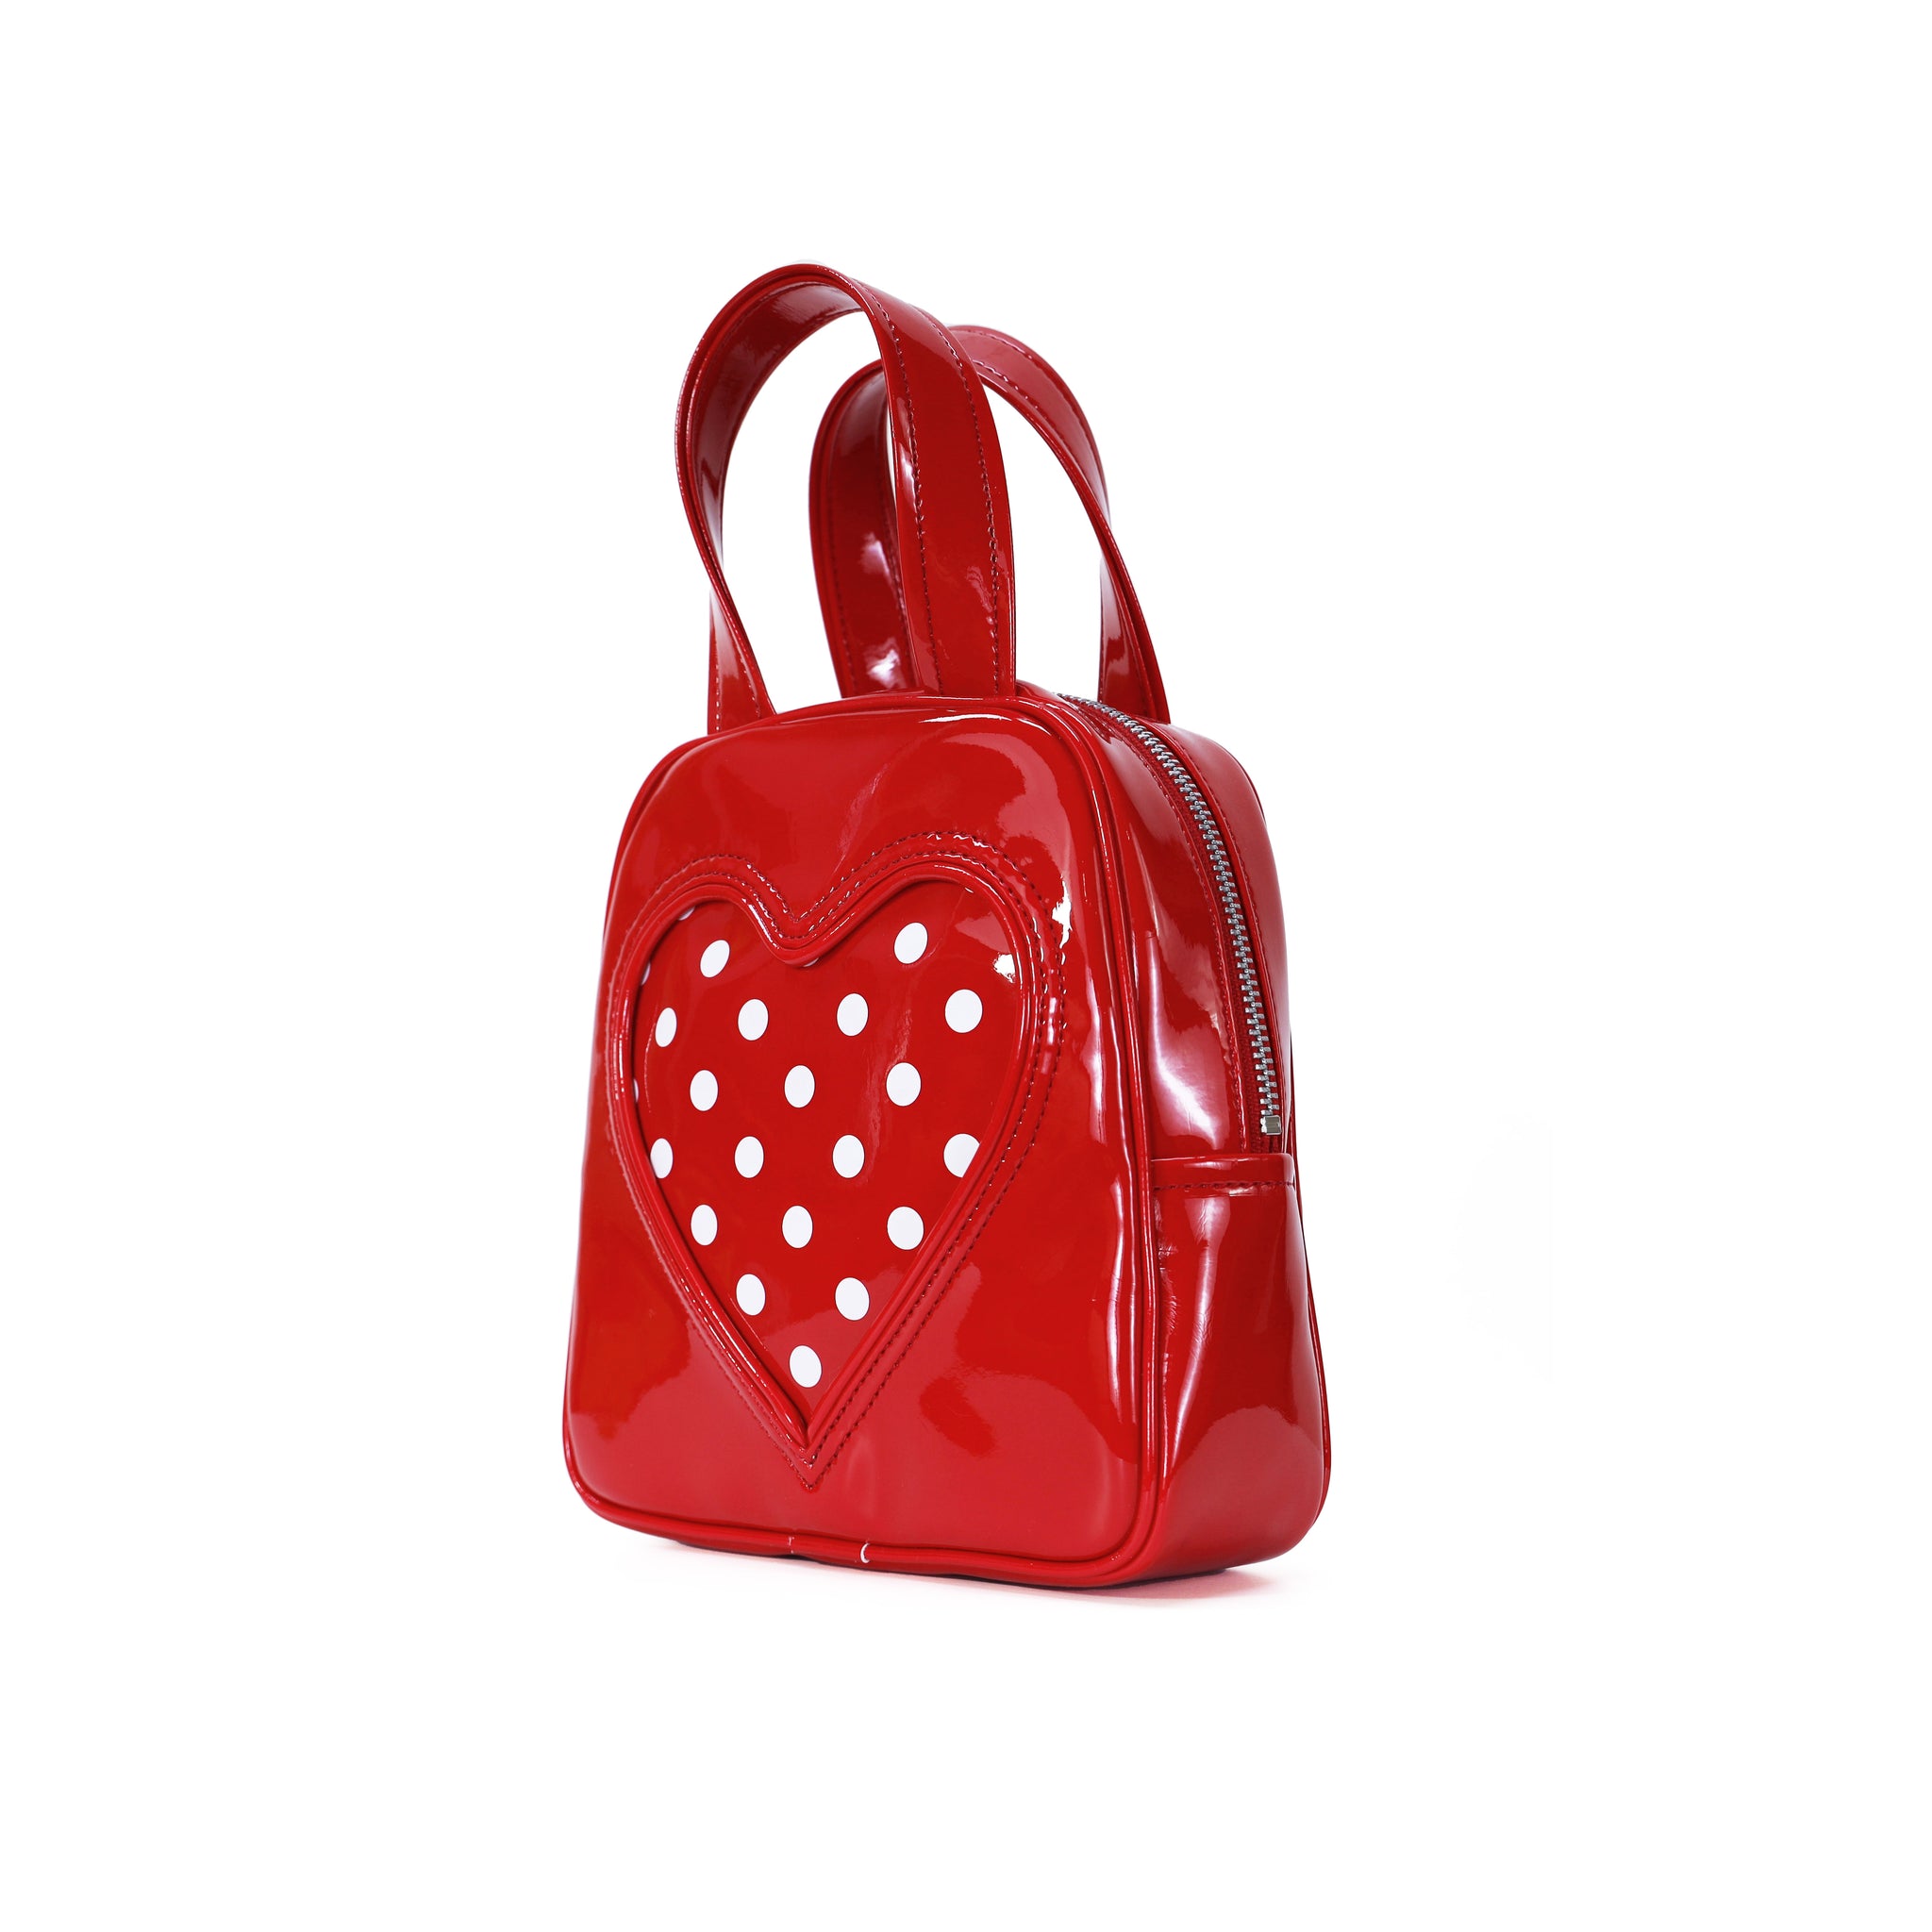 Patent Heart Polka-Dot Red Bag